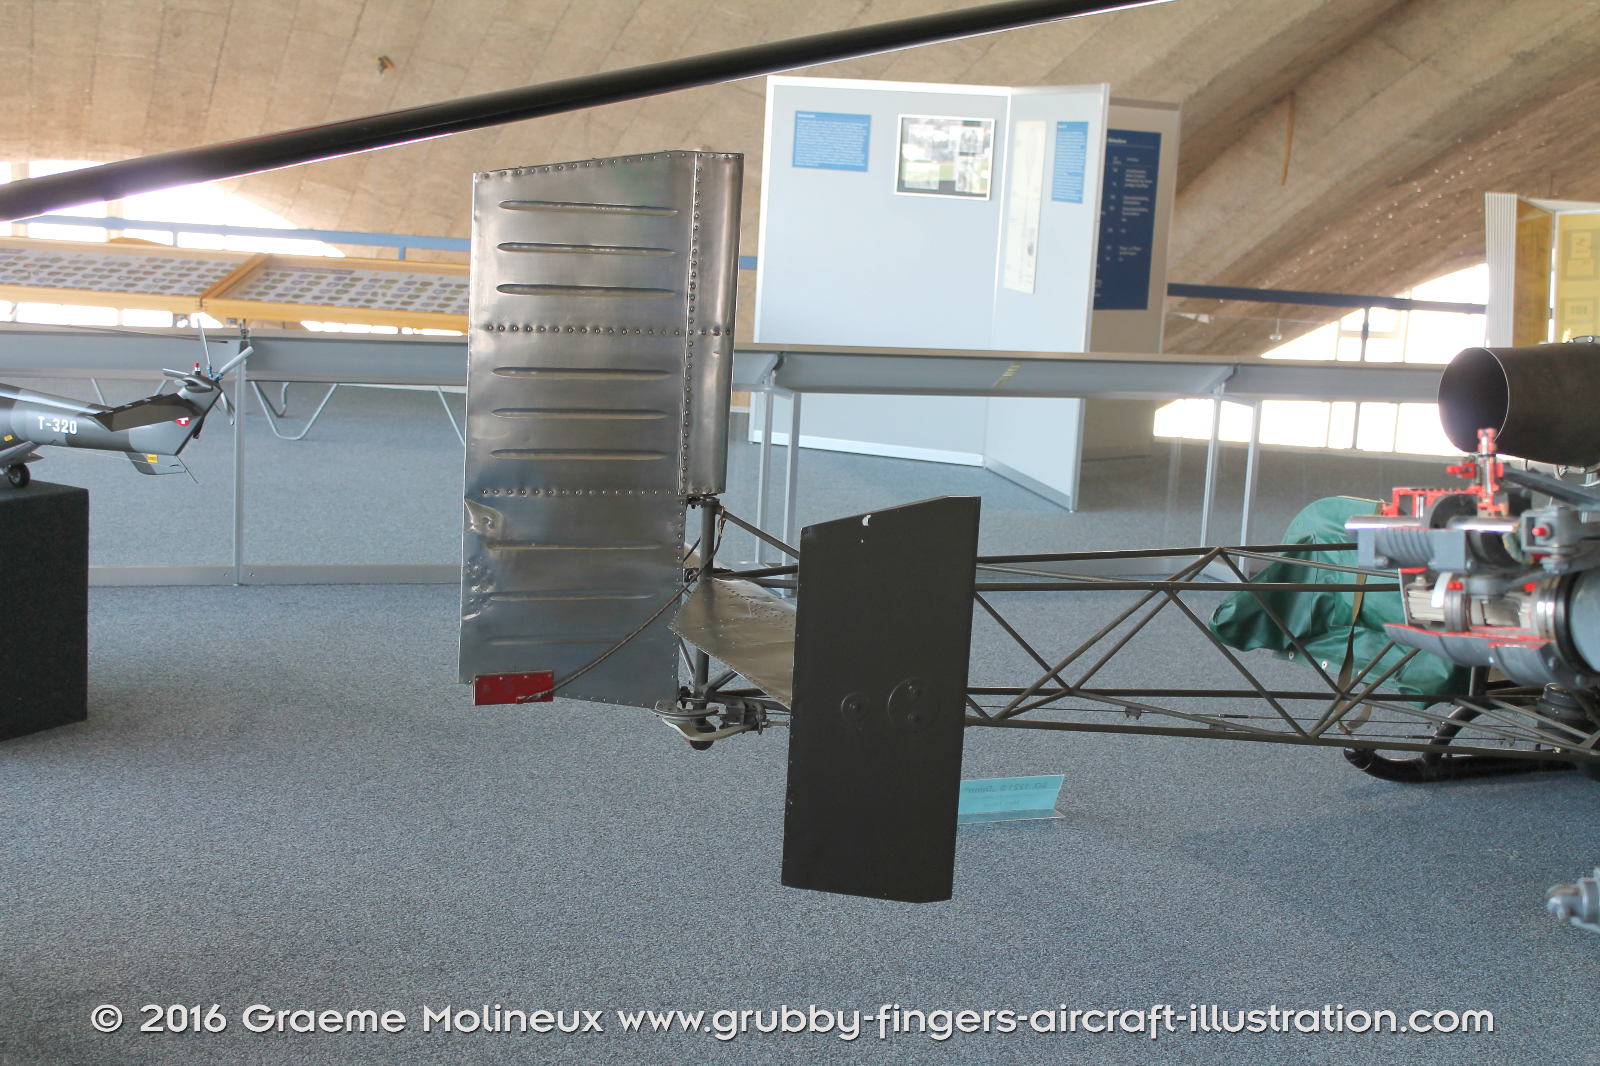 SUD_OUEST_DJINN_V-23_Swiss_Air_Force_Museum_2015_24_GrubbyFingers